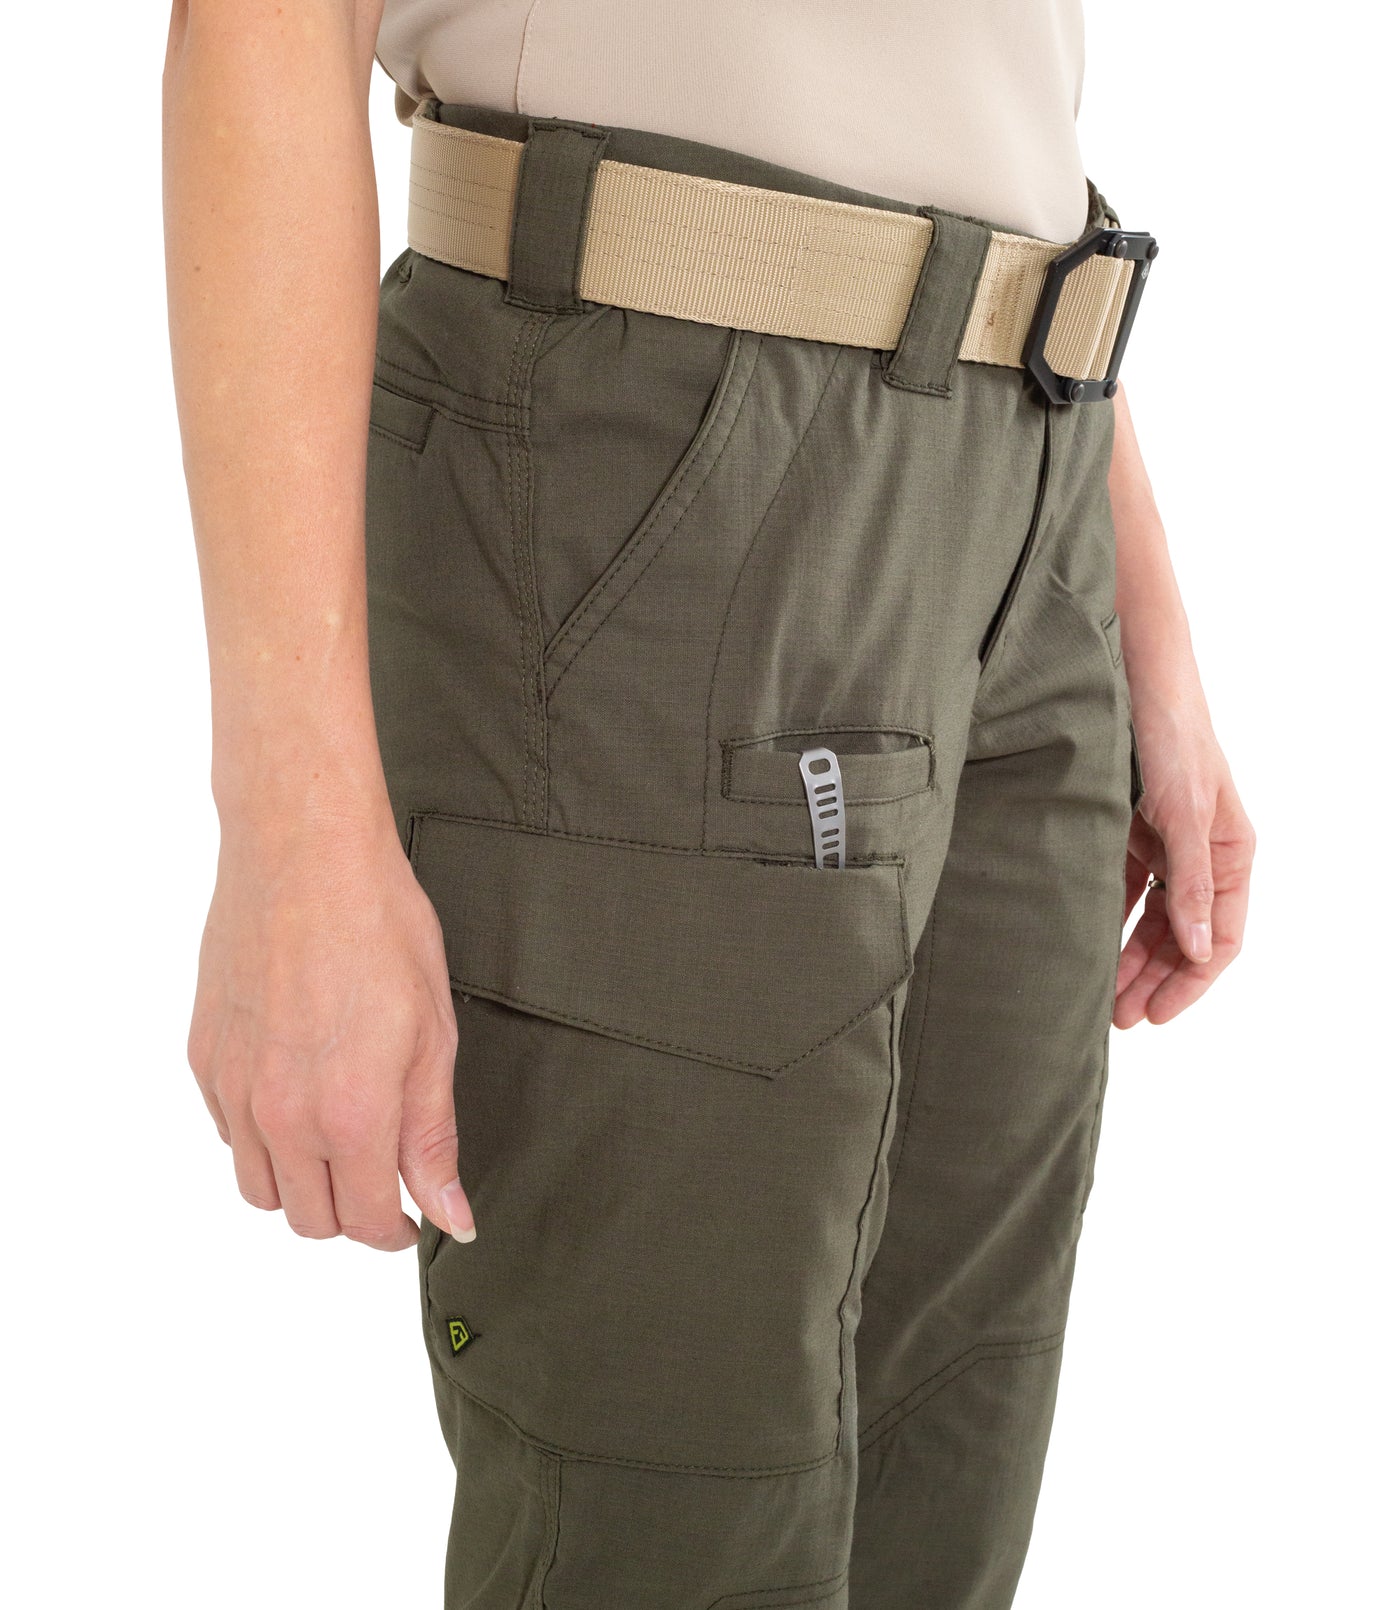 Pocket of Women's V2 Tactical Pants in OD Green